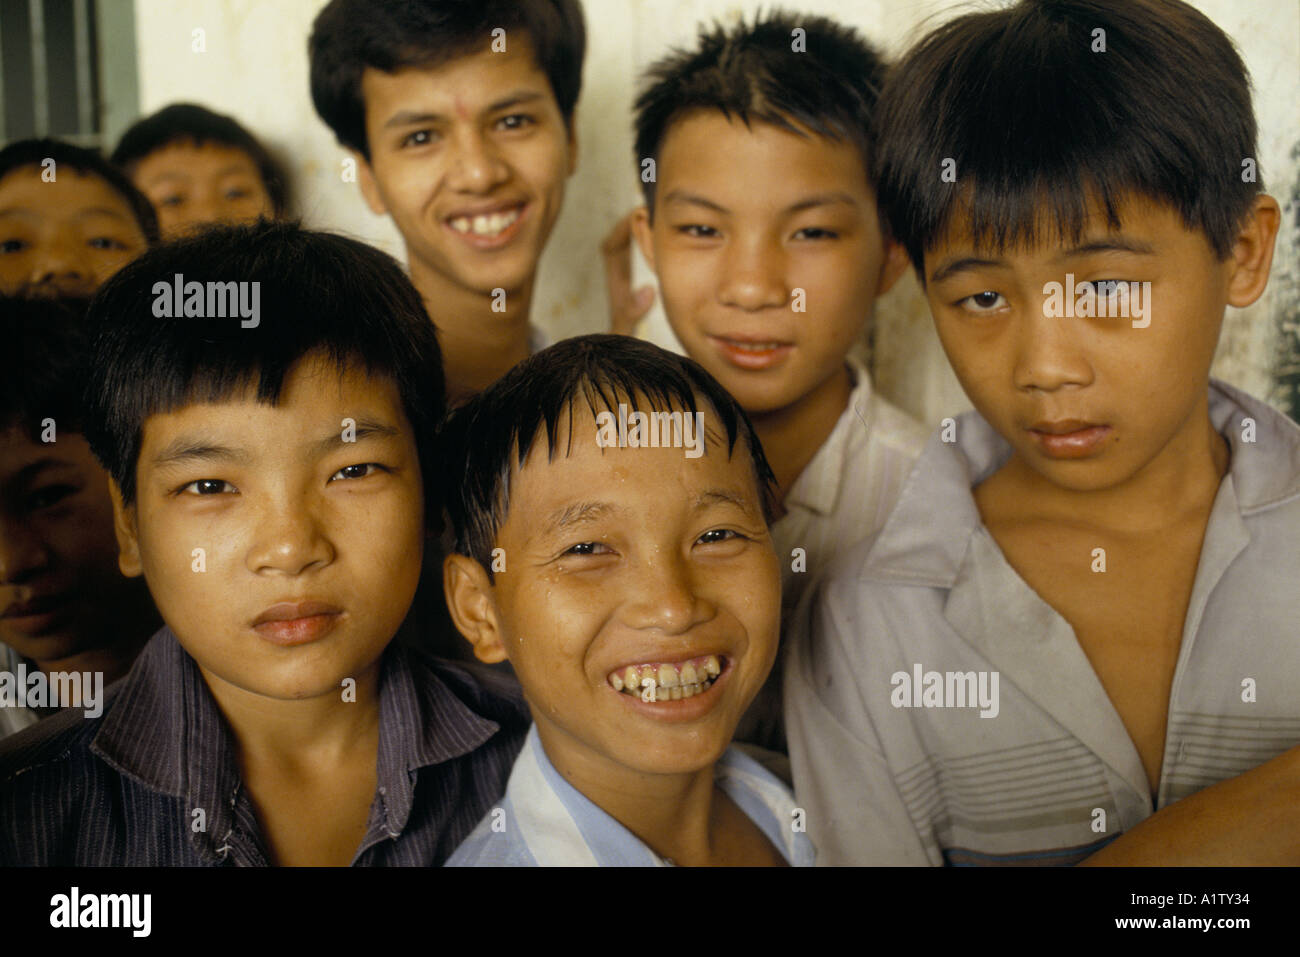 STREETBOYS VIETNAM HO CHI MINH CITY 1990 Stock Photo - Alamy